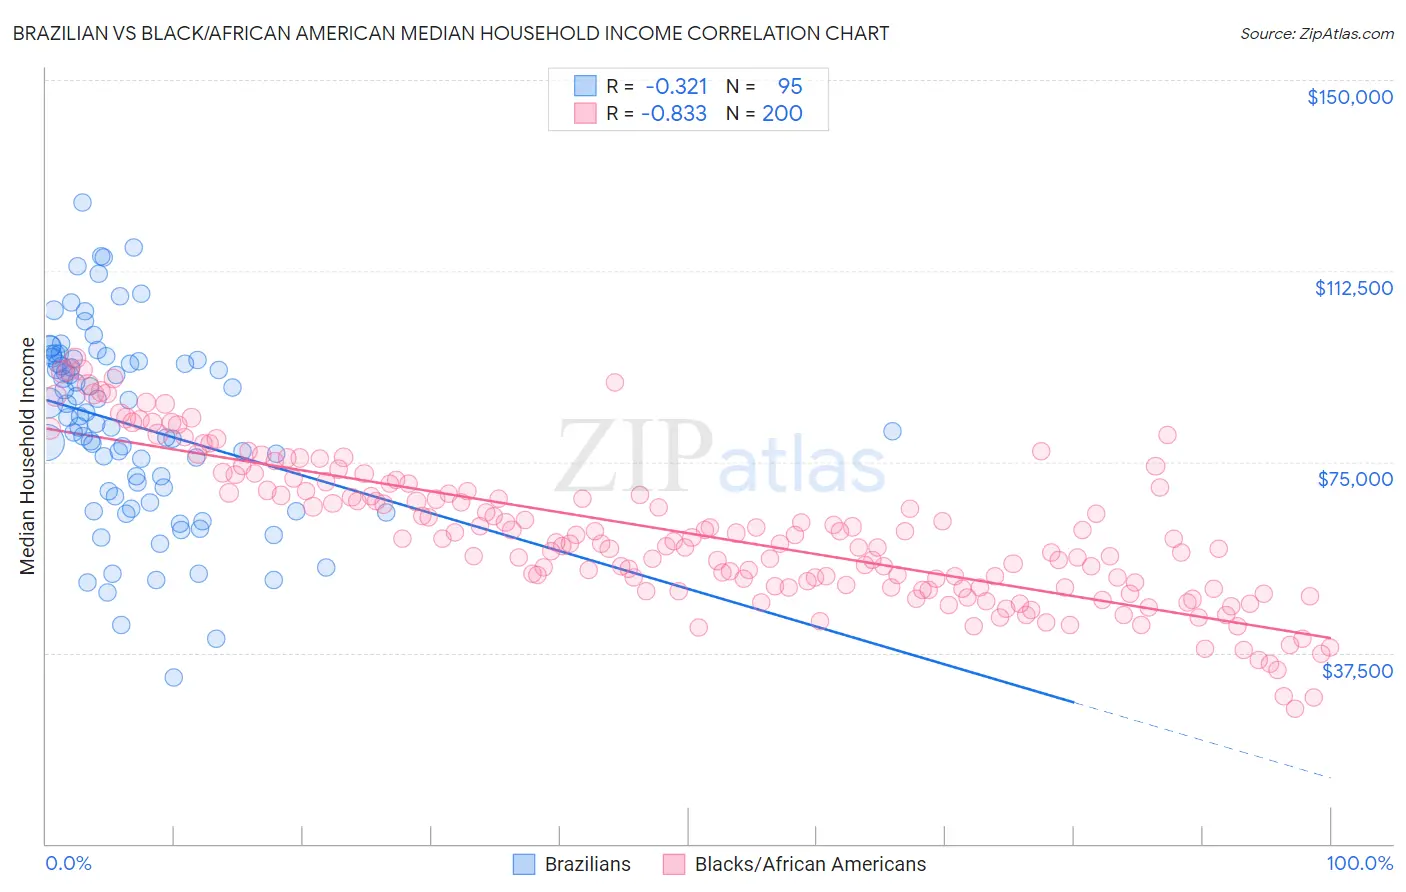 Brazilian vs Black/African American Median Household Income